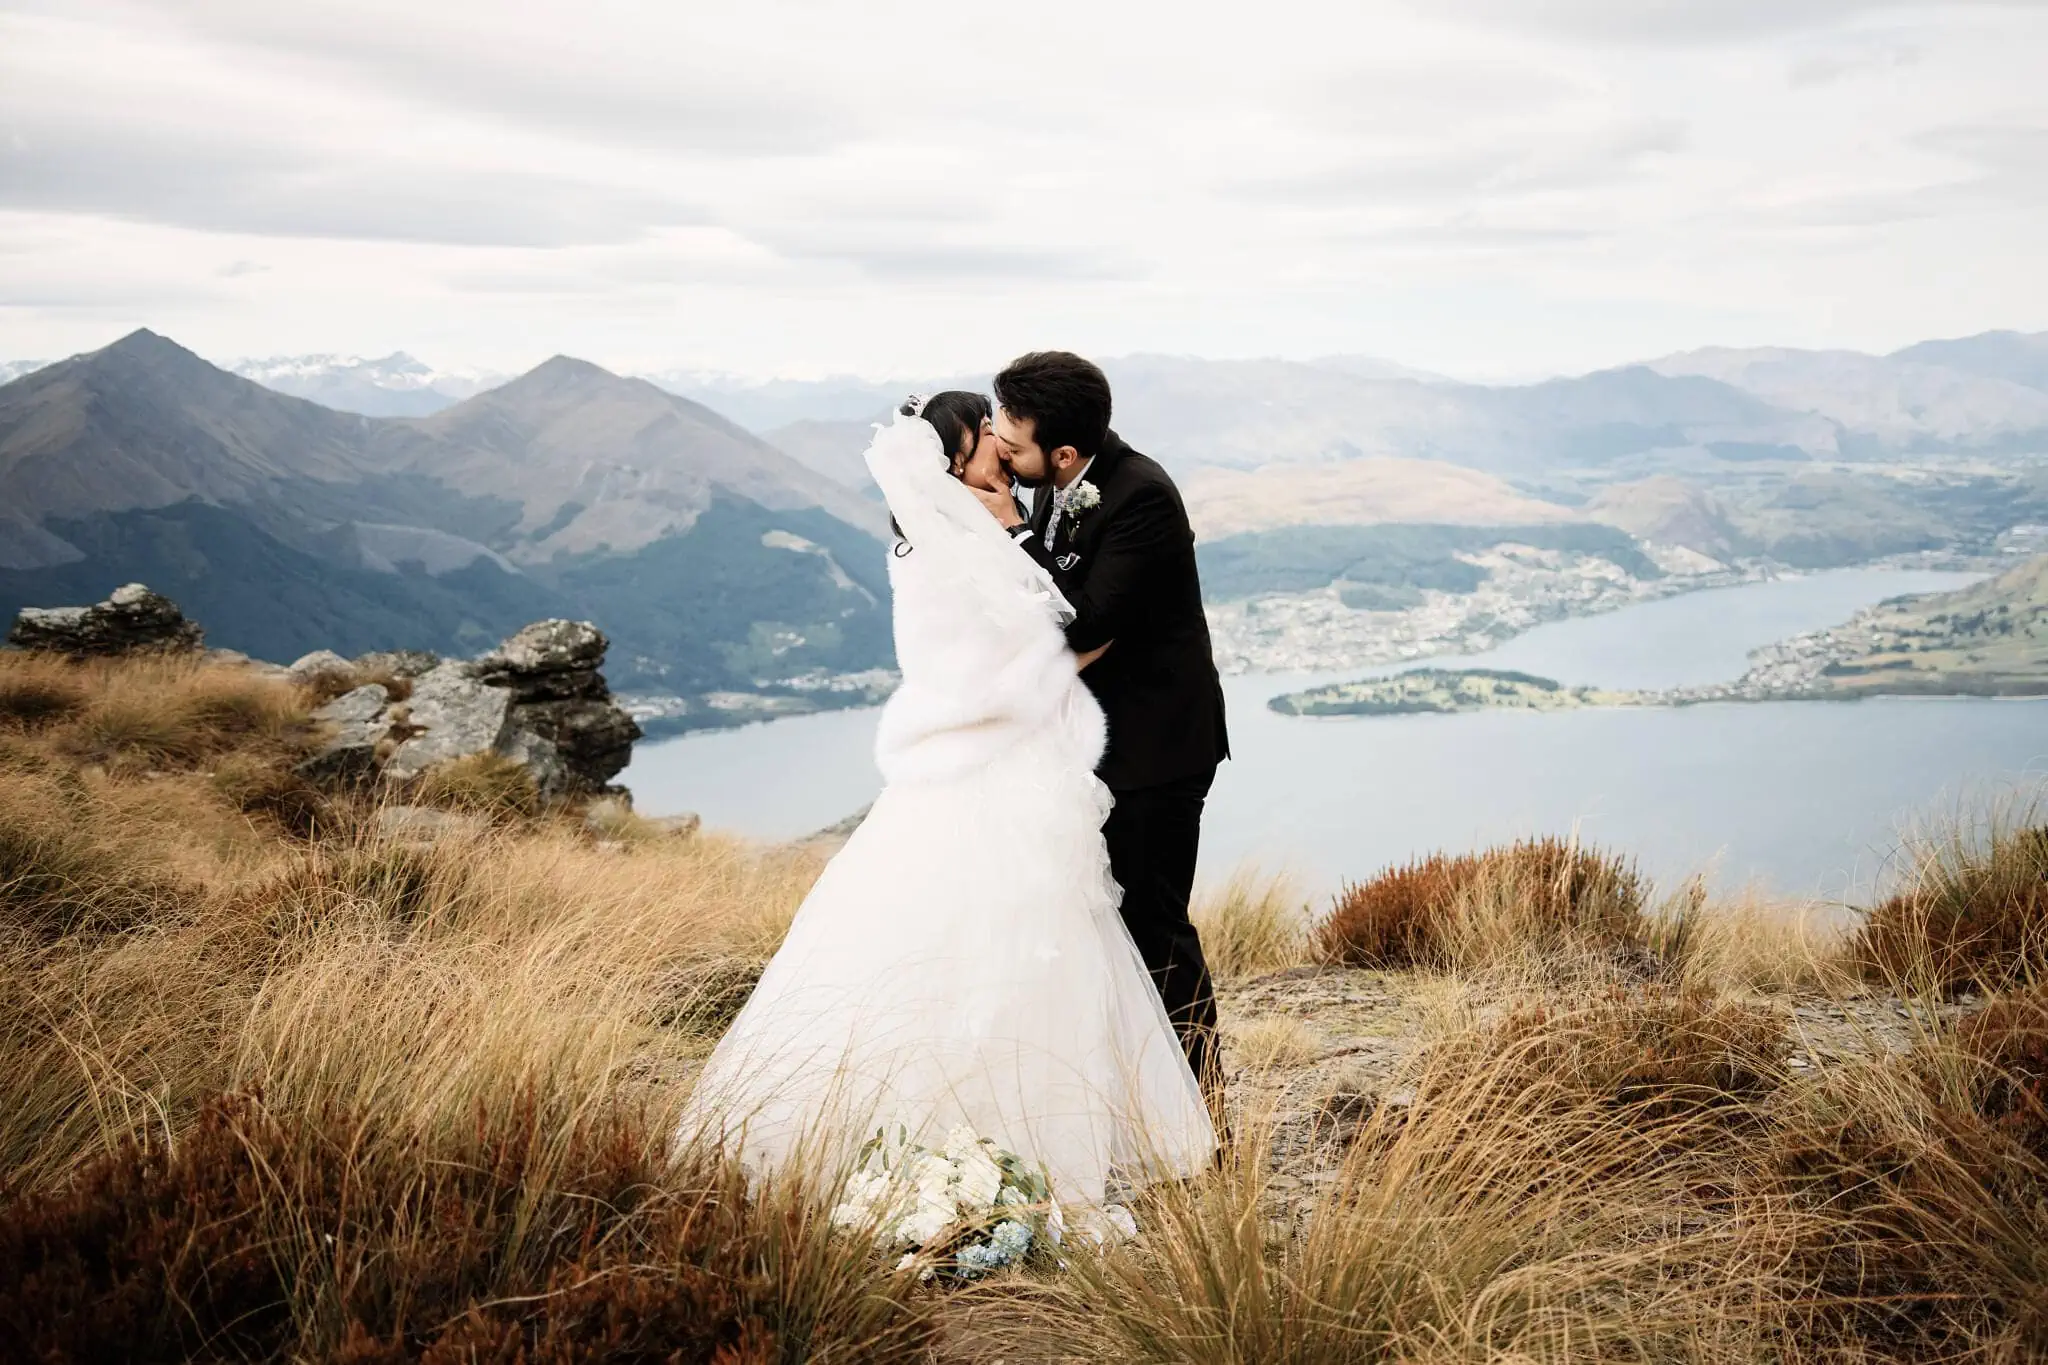 Carlos and Wanzhu's intimate elopement wedding on Cecil Peak overlooking Lake Wanaka.